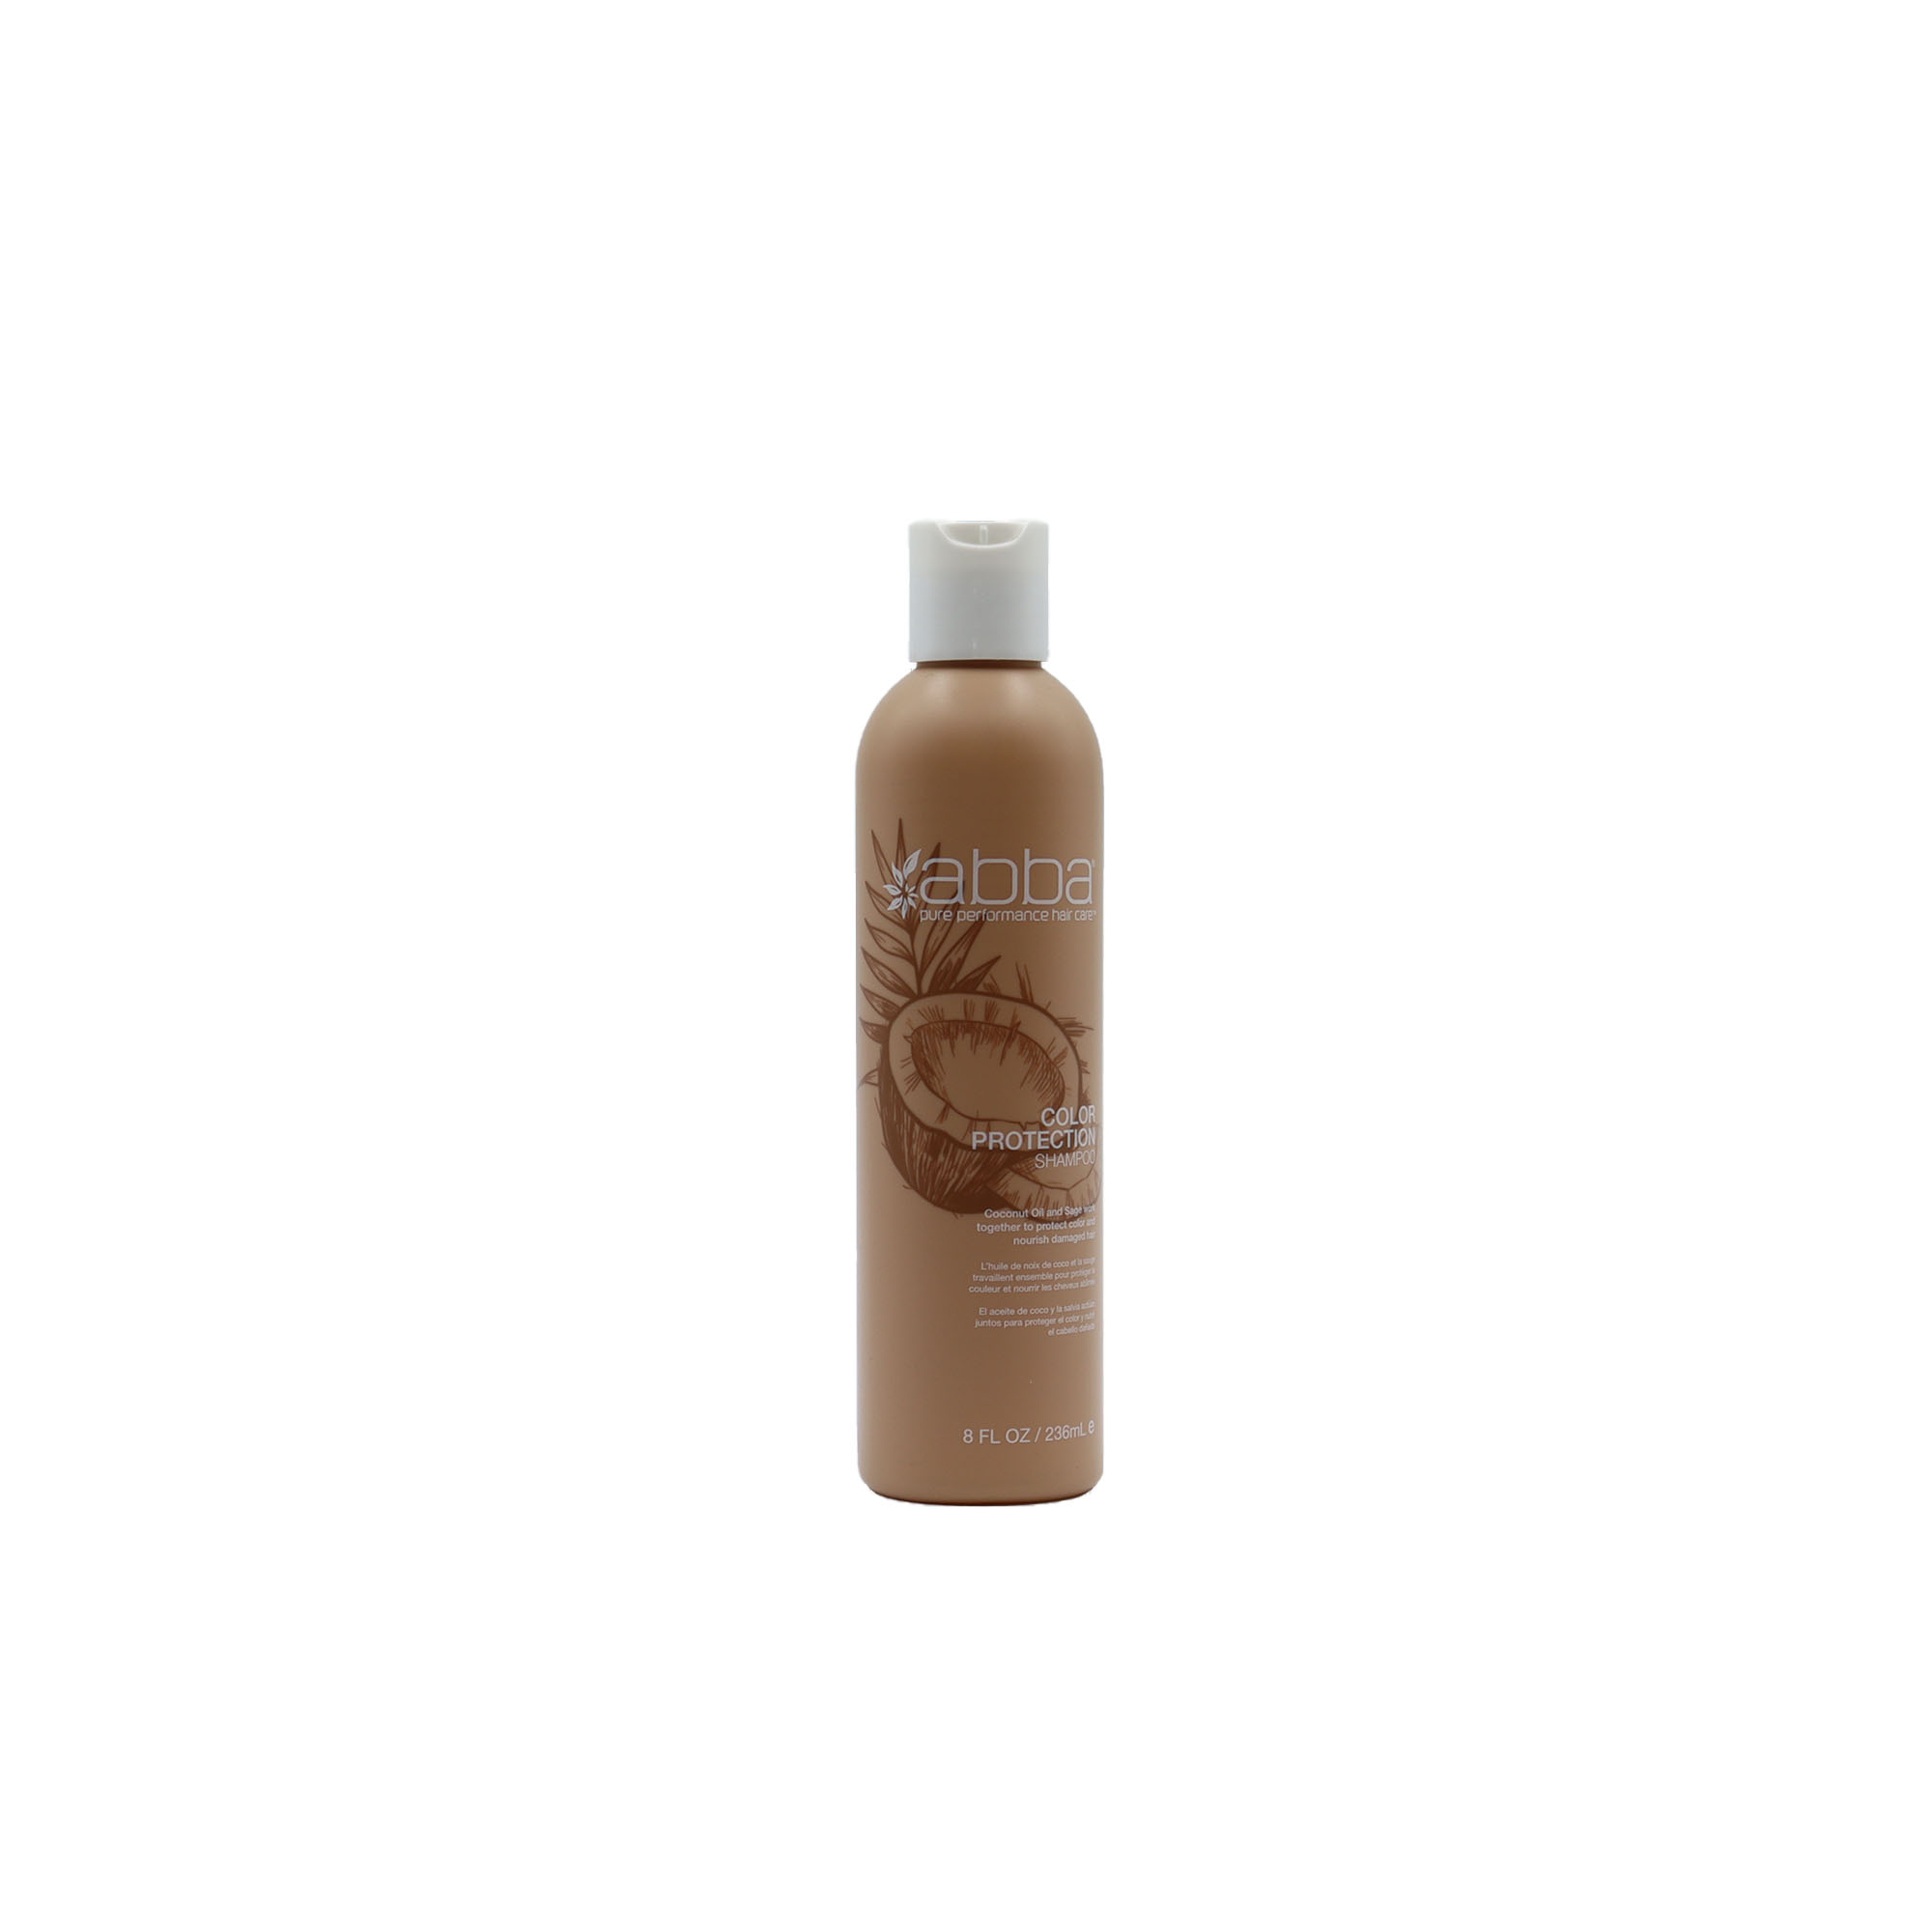 Abba Color Protection Shampoo 8 oz / 236 ml - image 1 of 3